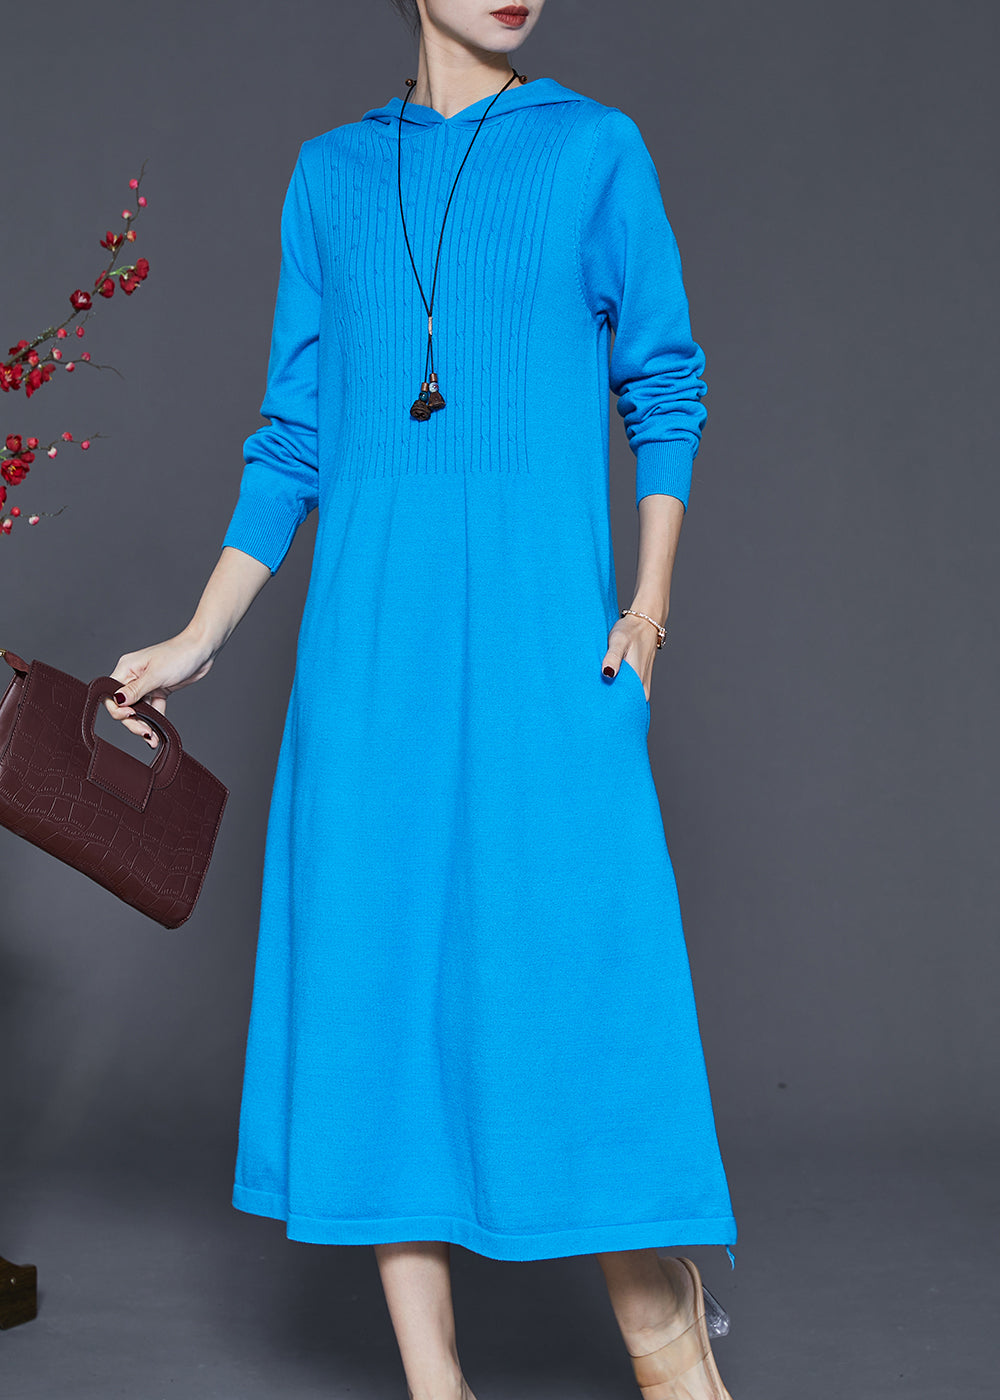 Women Blue Hooded Silm Fit Knit Long Dress Spring